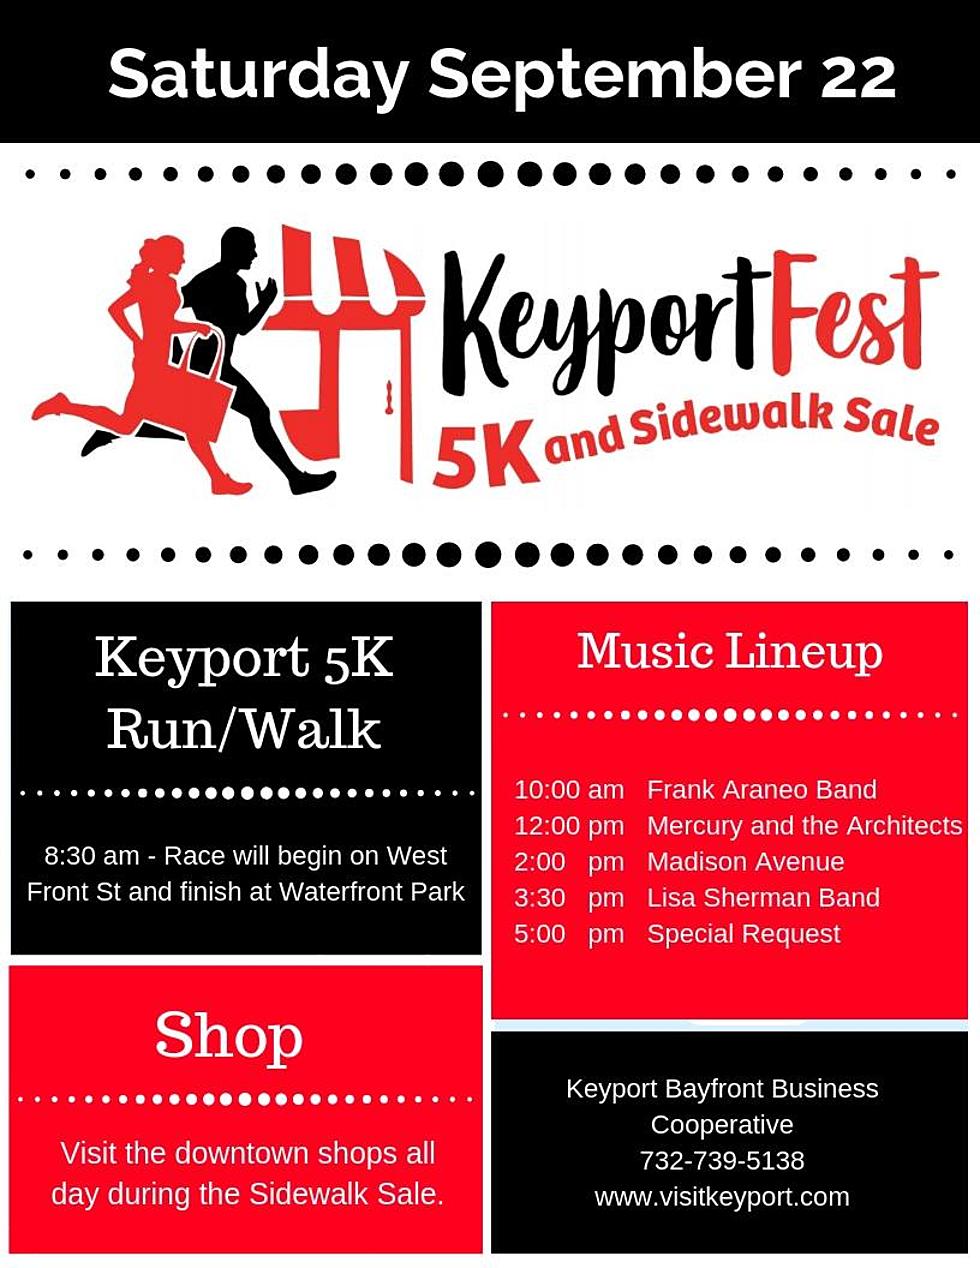 Keyport Fest Live Music and Sidewalk Sale Saturday